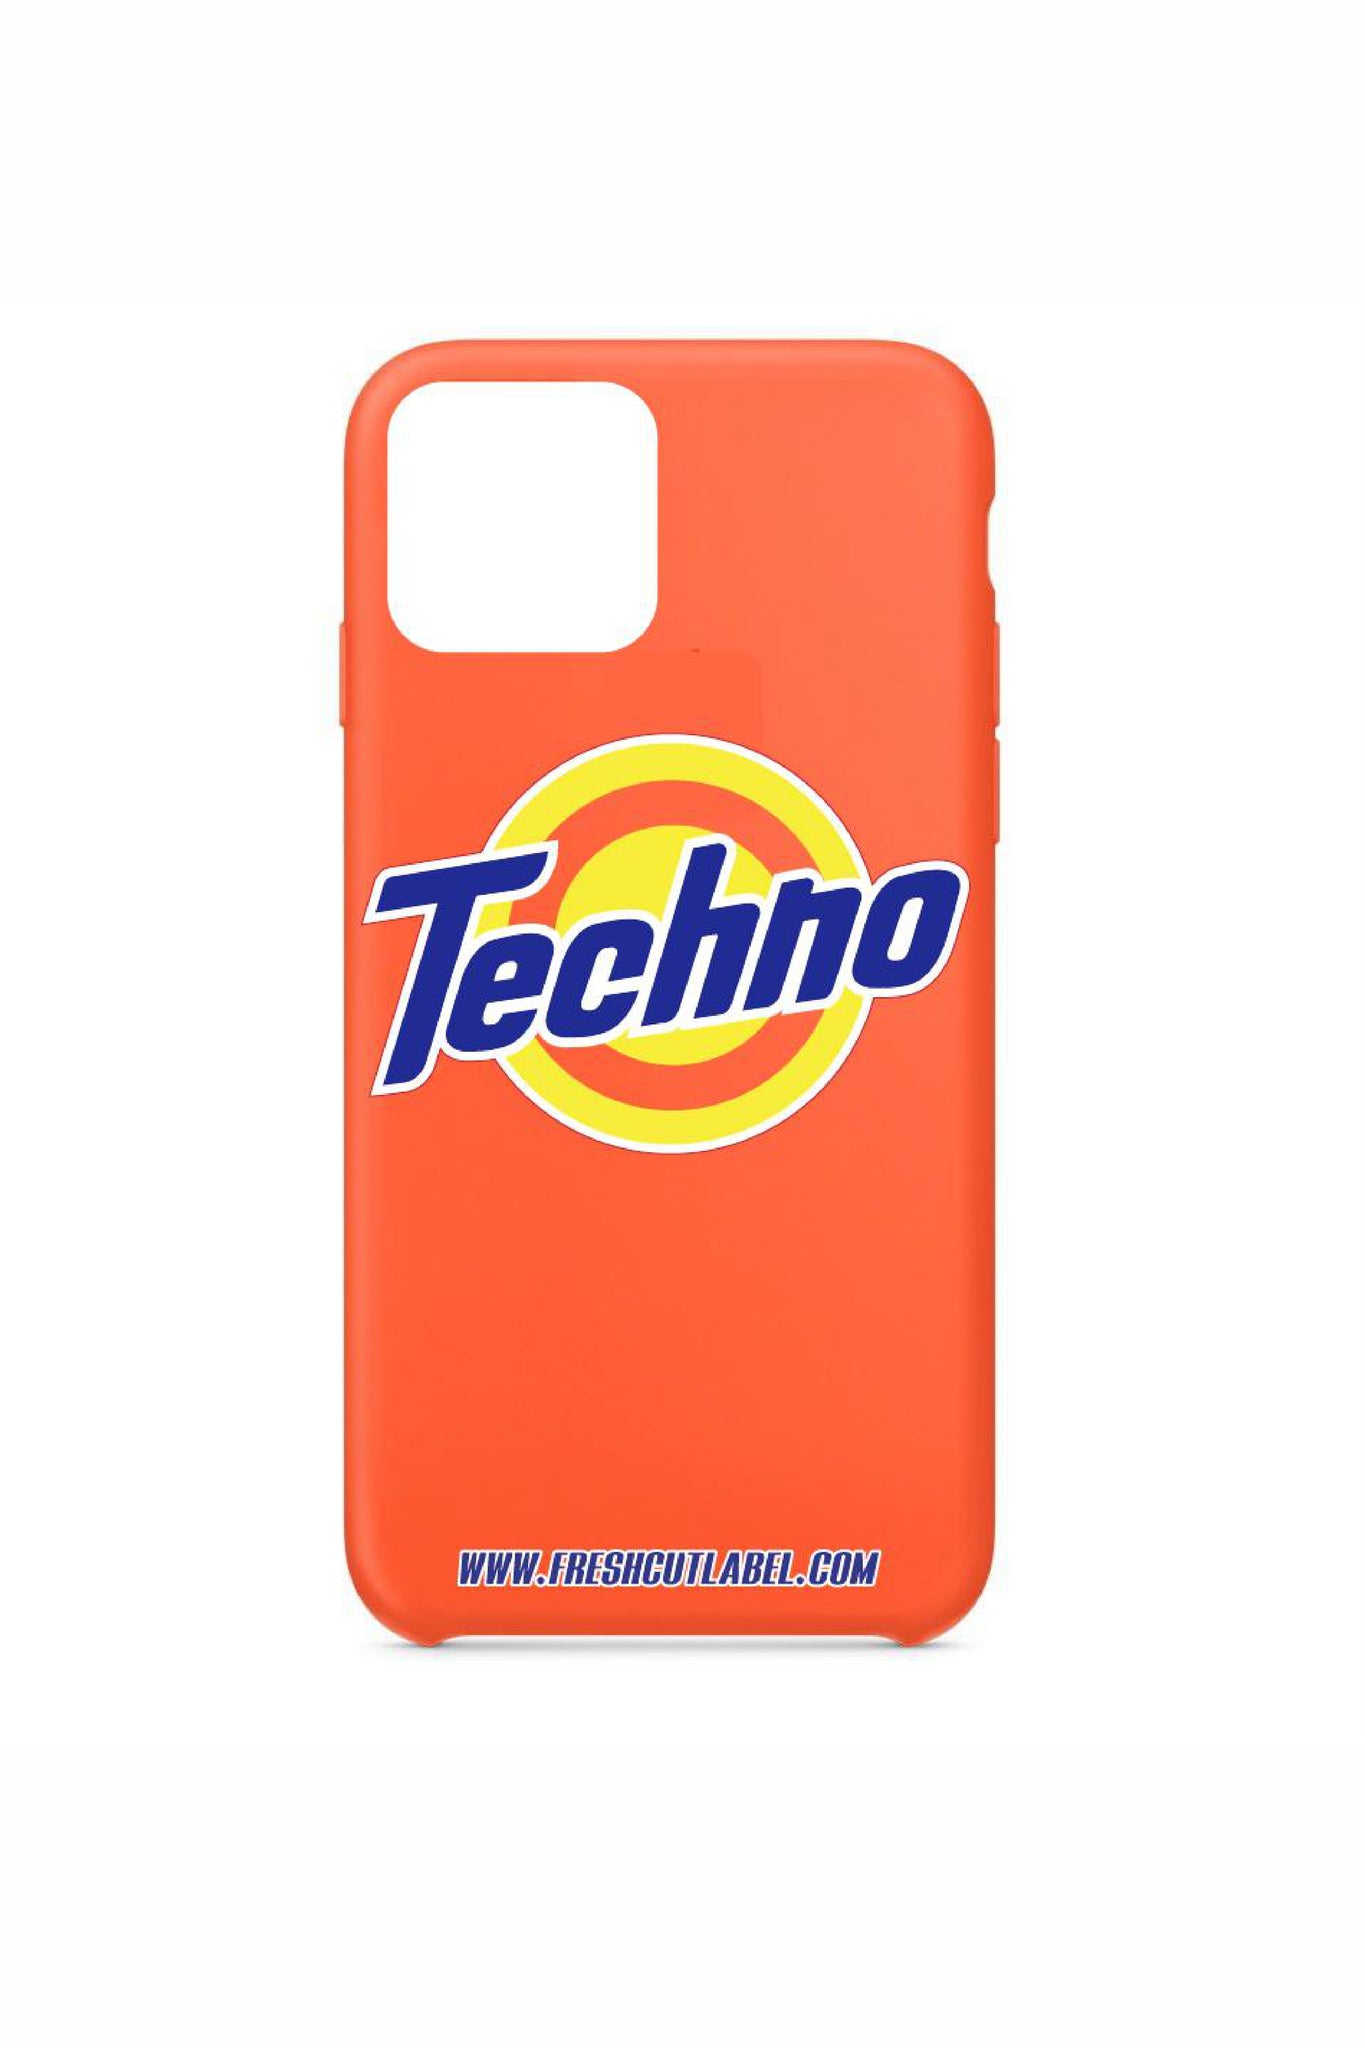 Techno Powder iPhone-Hülle